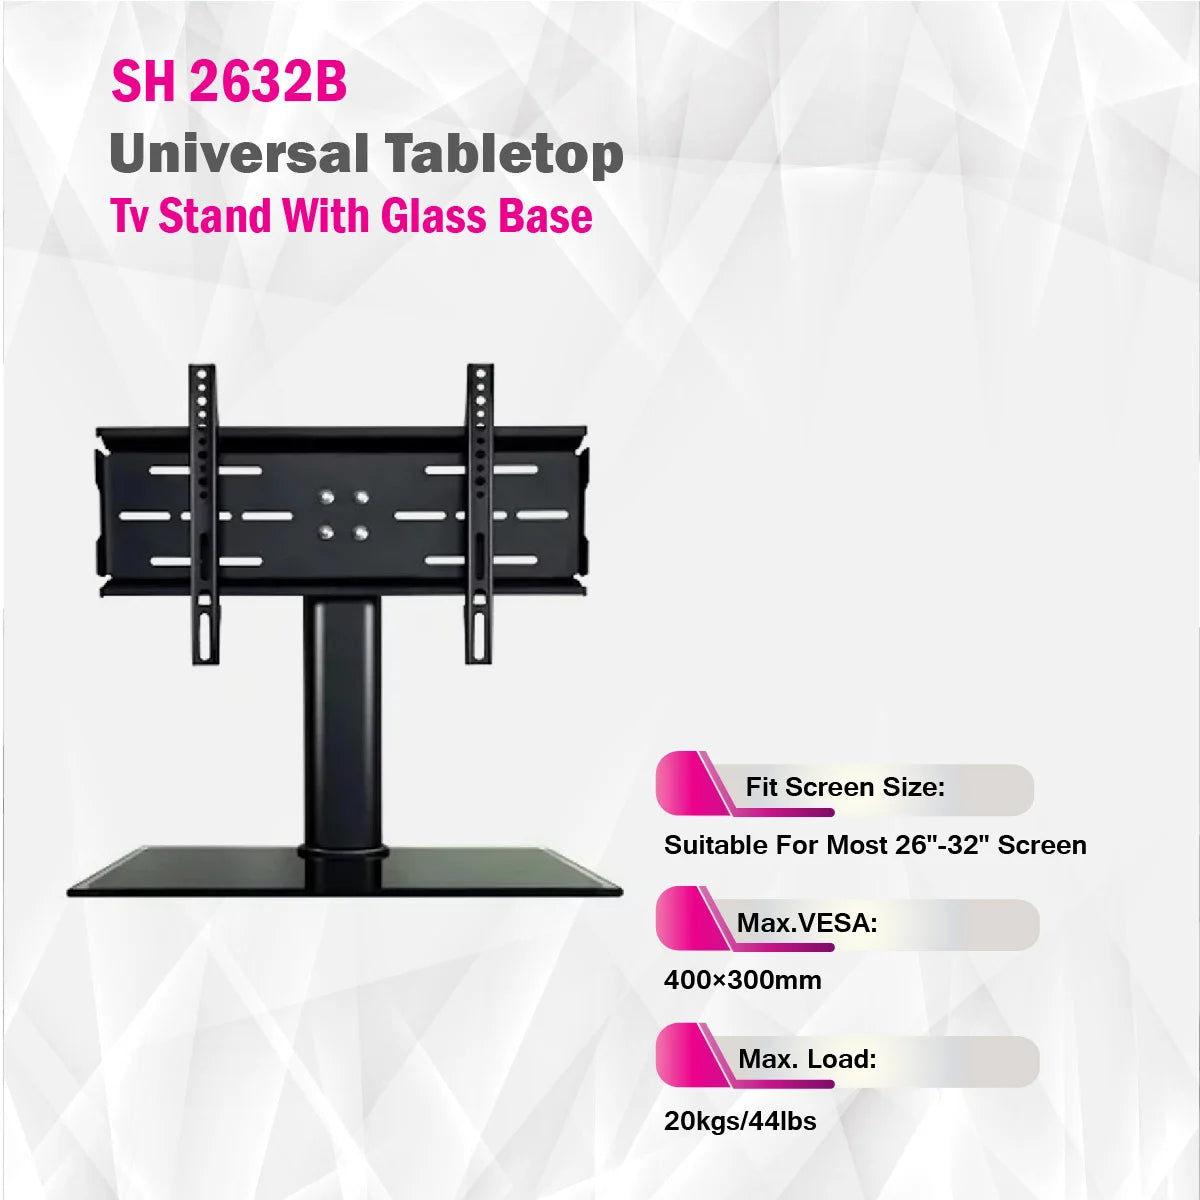 SkillTech -SH 2632B -Universal Tabletop Tv Stand With Glass Base Ergonomic Mount